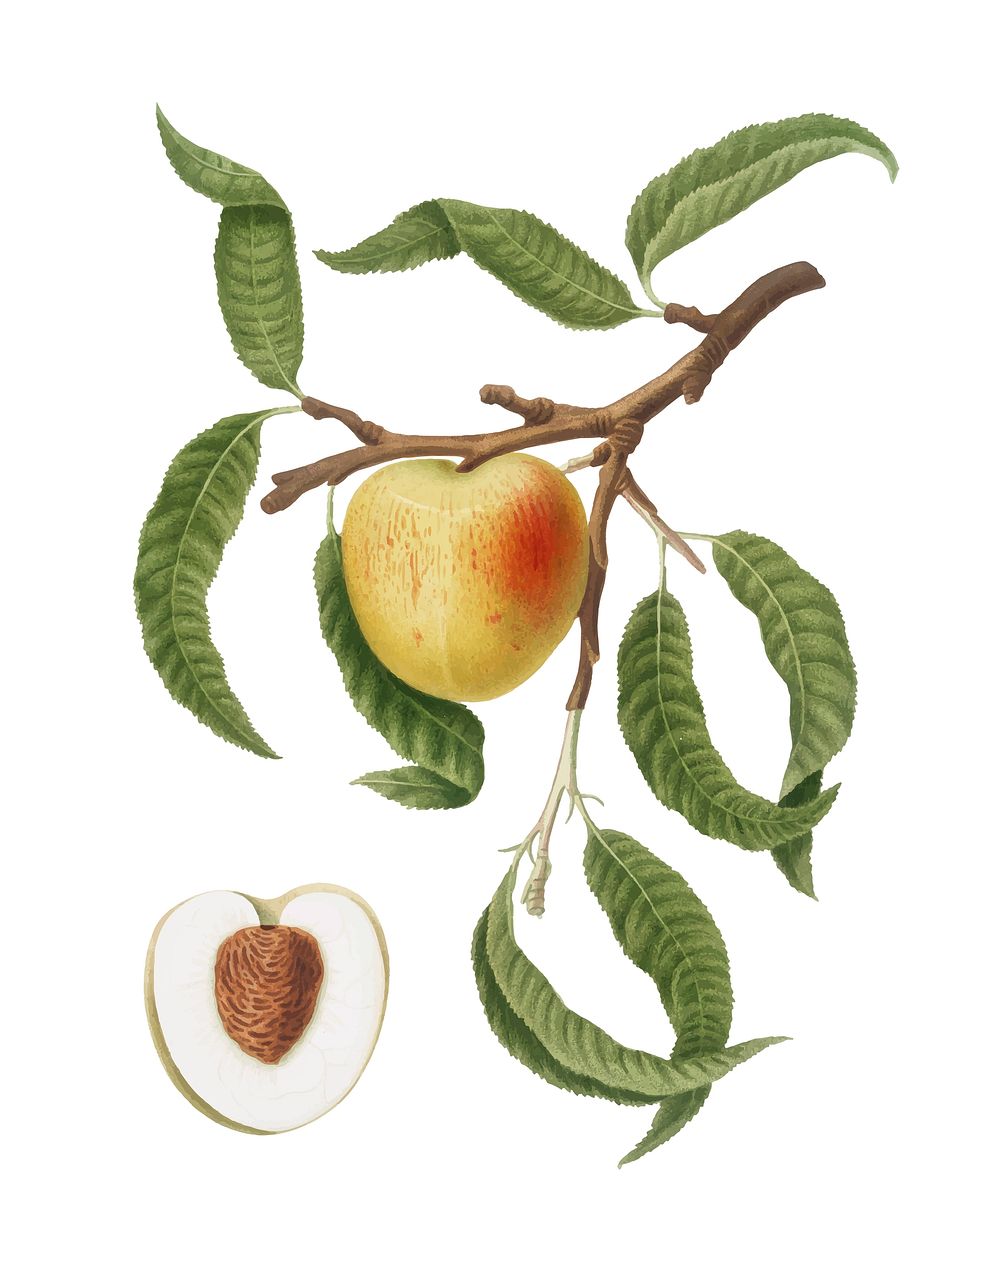 Peach from Pomona Italiana (1817-1839) by Giorgio Gallesio (1772-1839). Original from New York public library. Digitally…